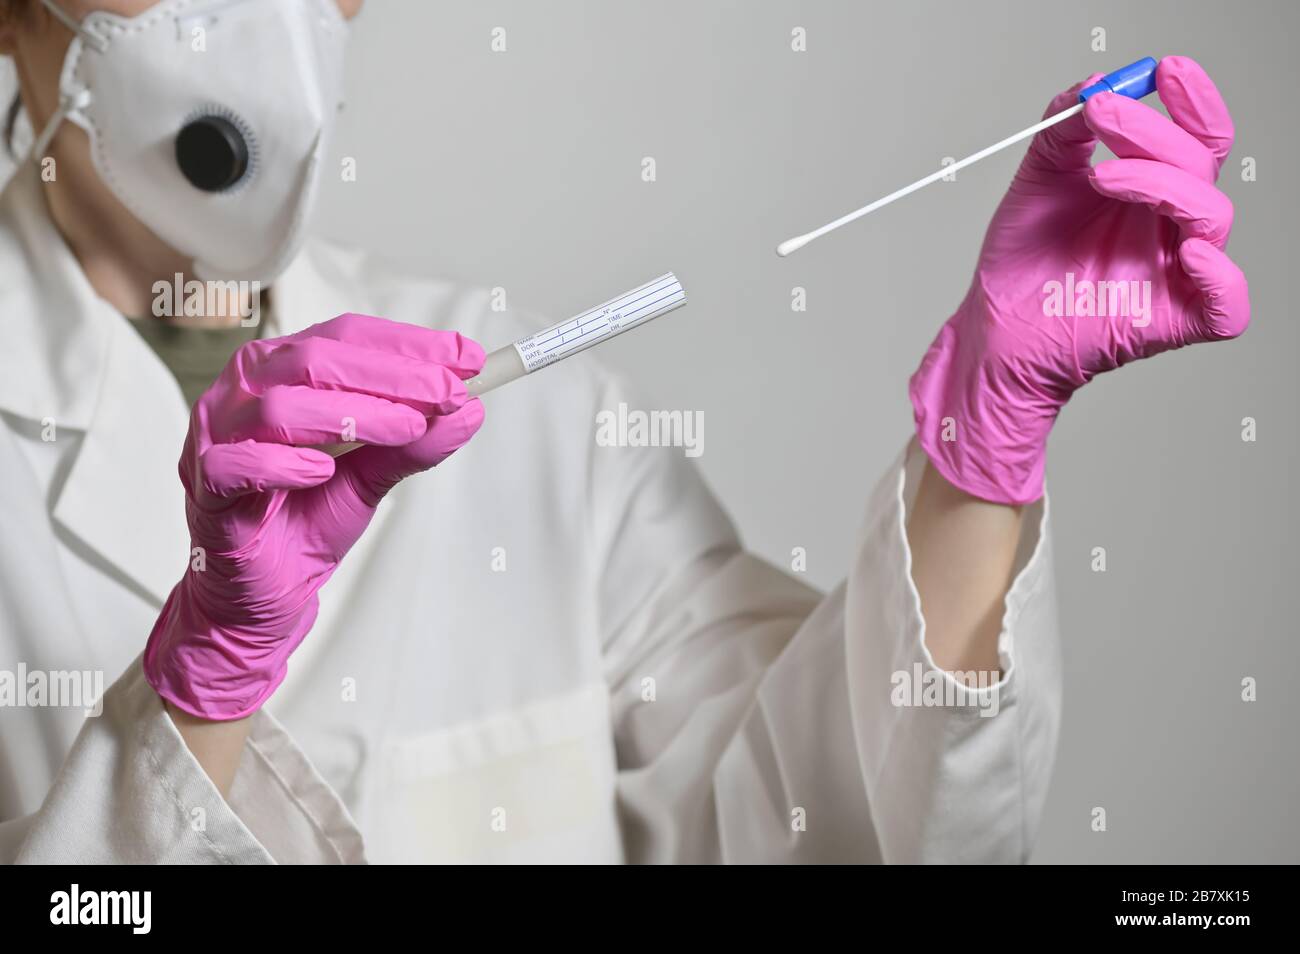 Nurse Holds A Swab For The Coronavirus / Covid19 Test Stock Photo